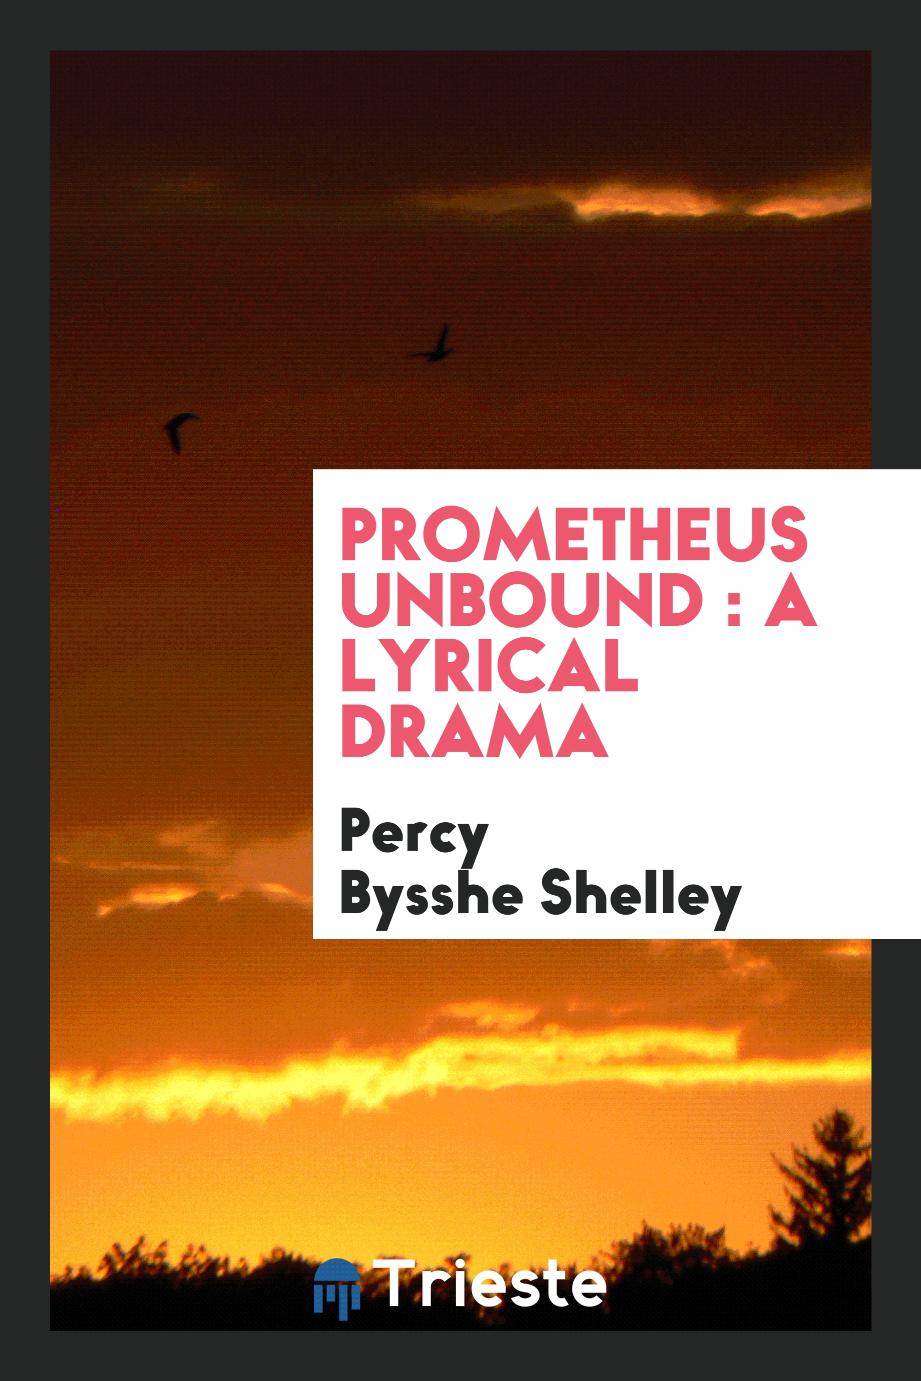 Prometheus unbound : a lyrical drama